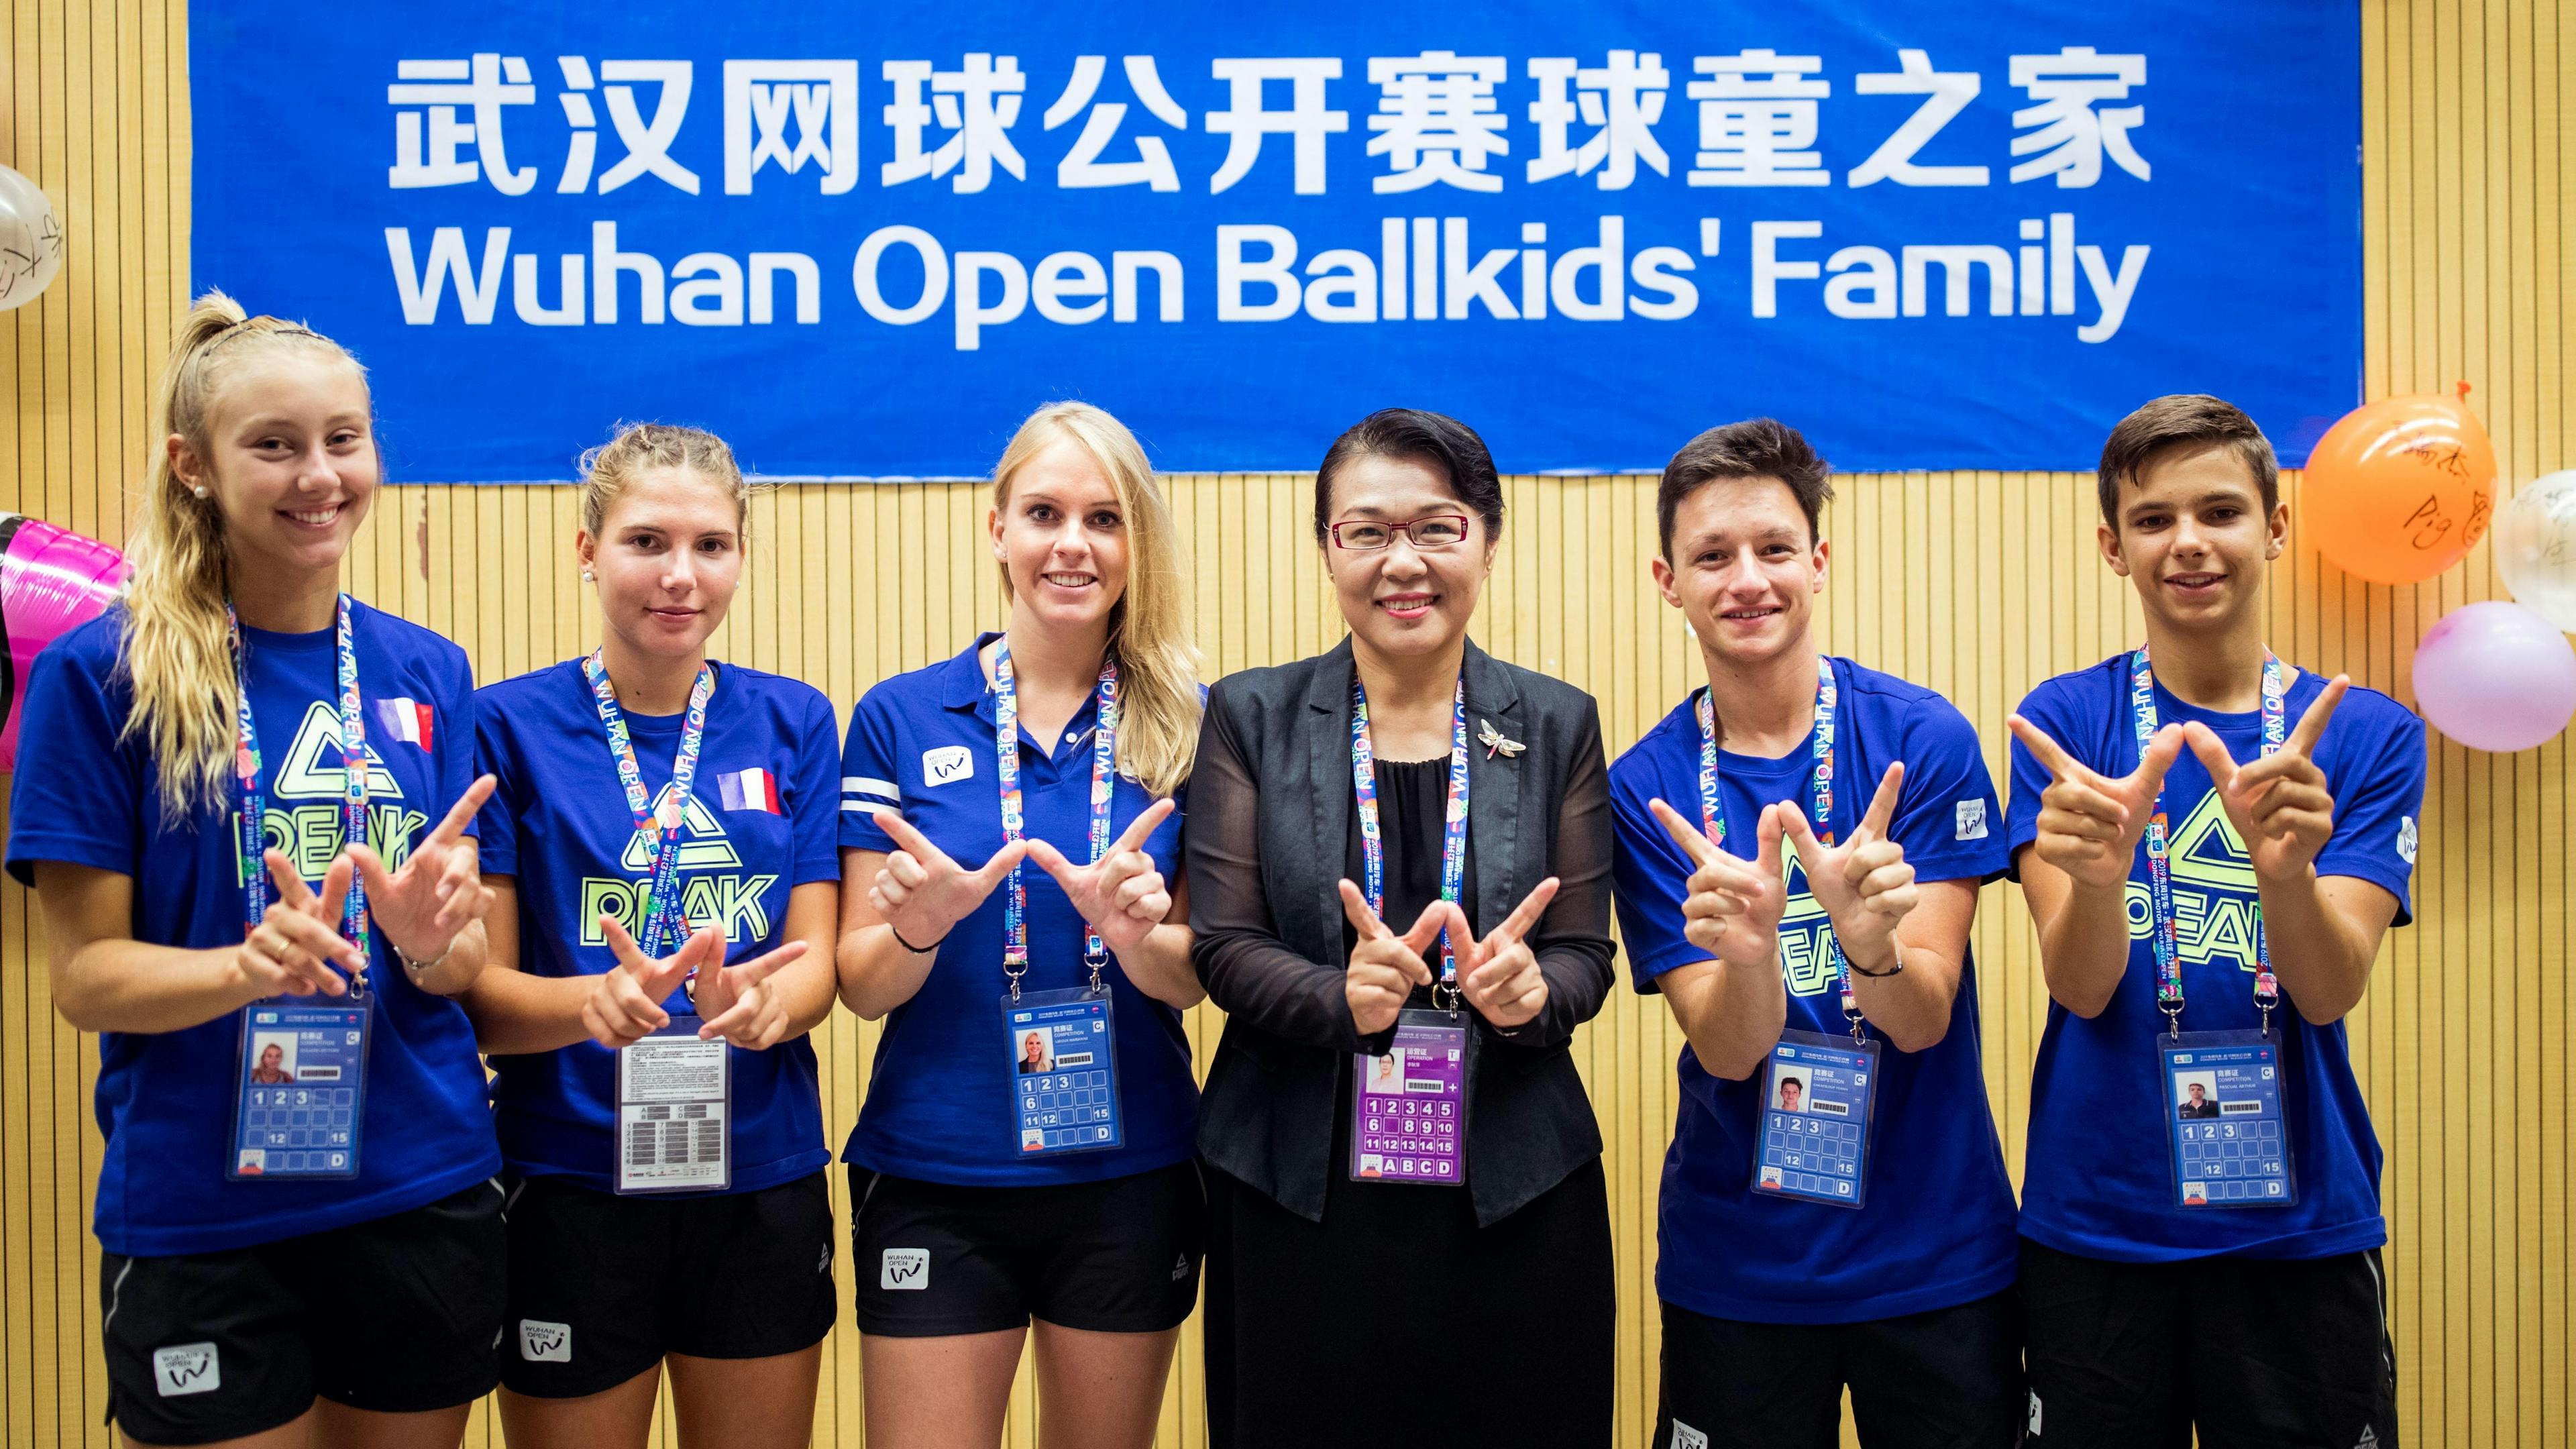 De g. à d. Victoire, Reine, Marianne, Madame Li Qiuping, co-directrice du tournoi, Yoann, Arthur